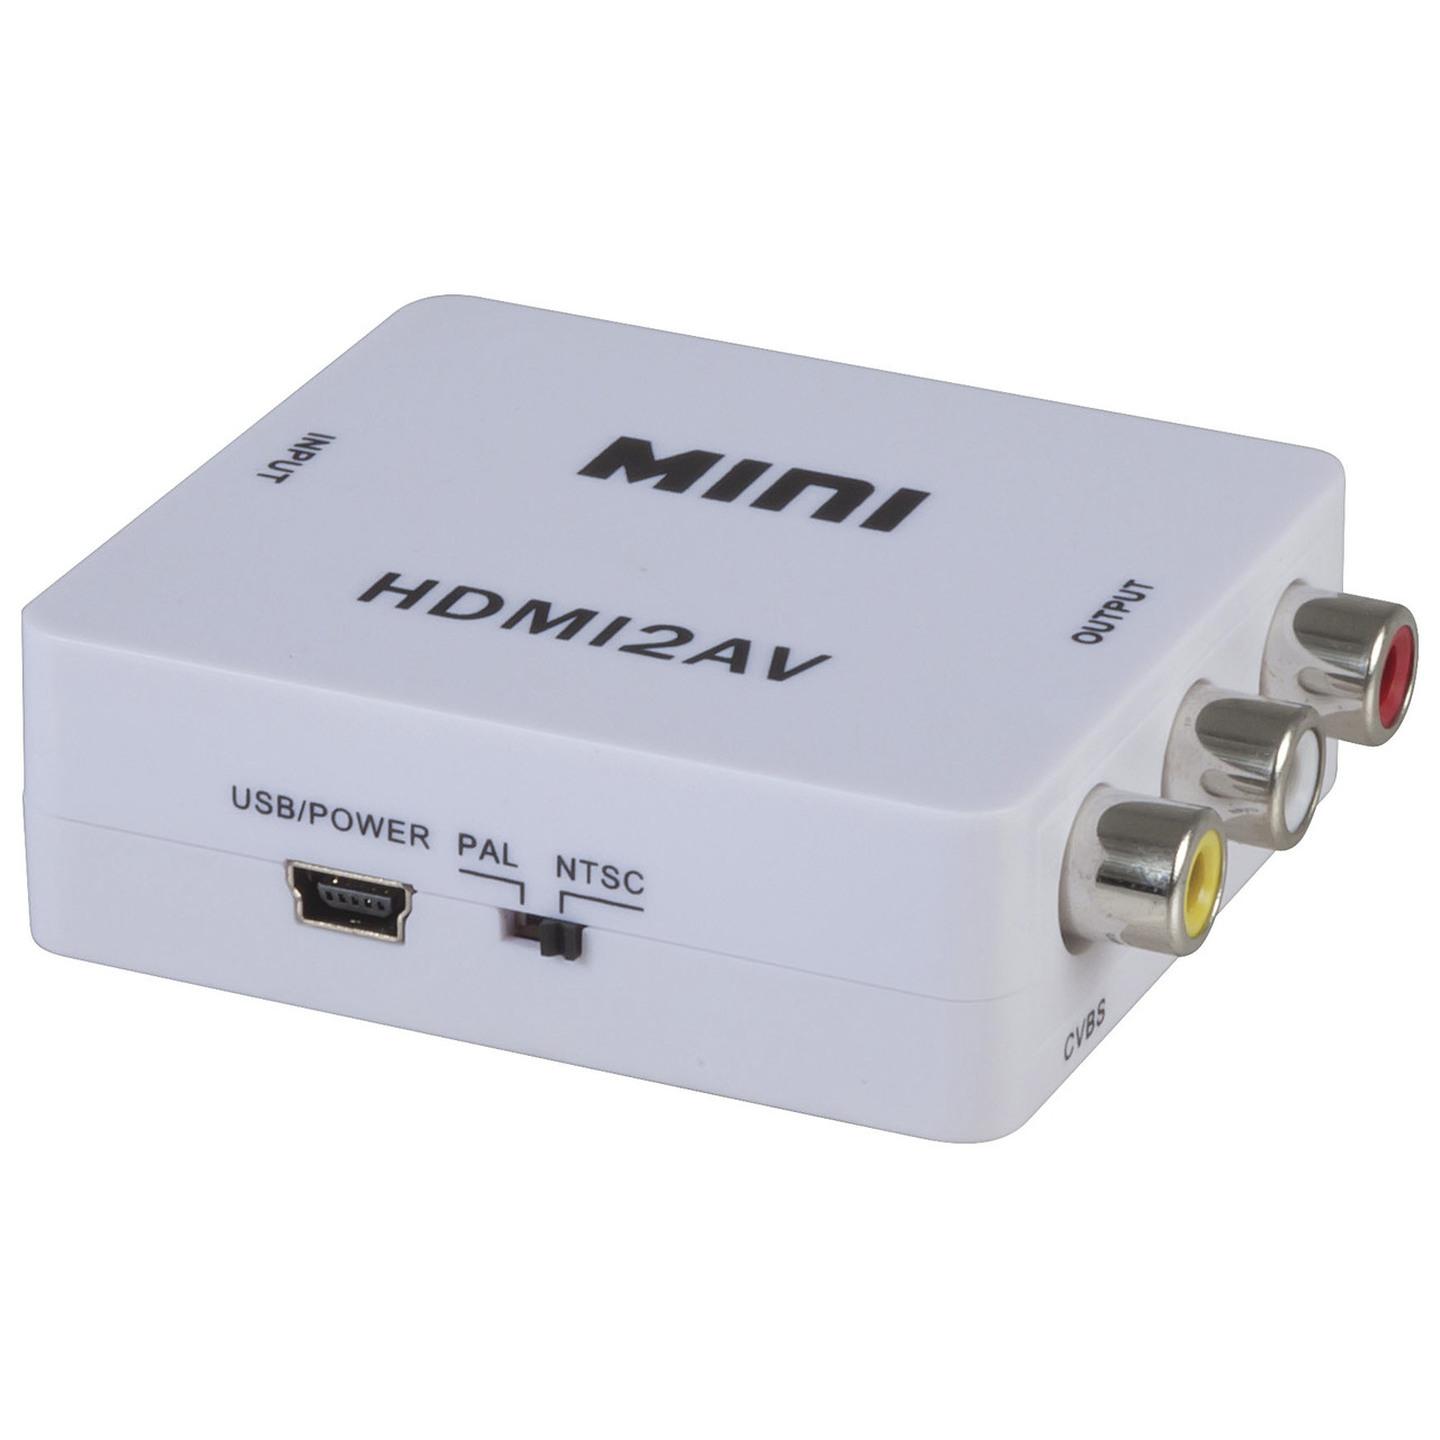 Digitech HDMI to Composite AV Converter